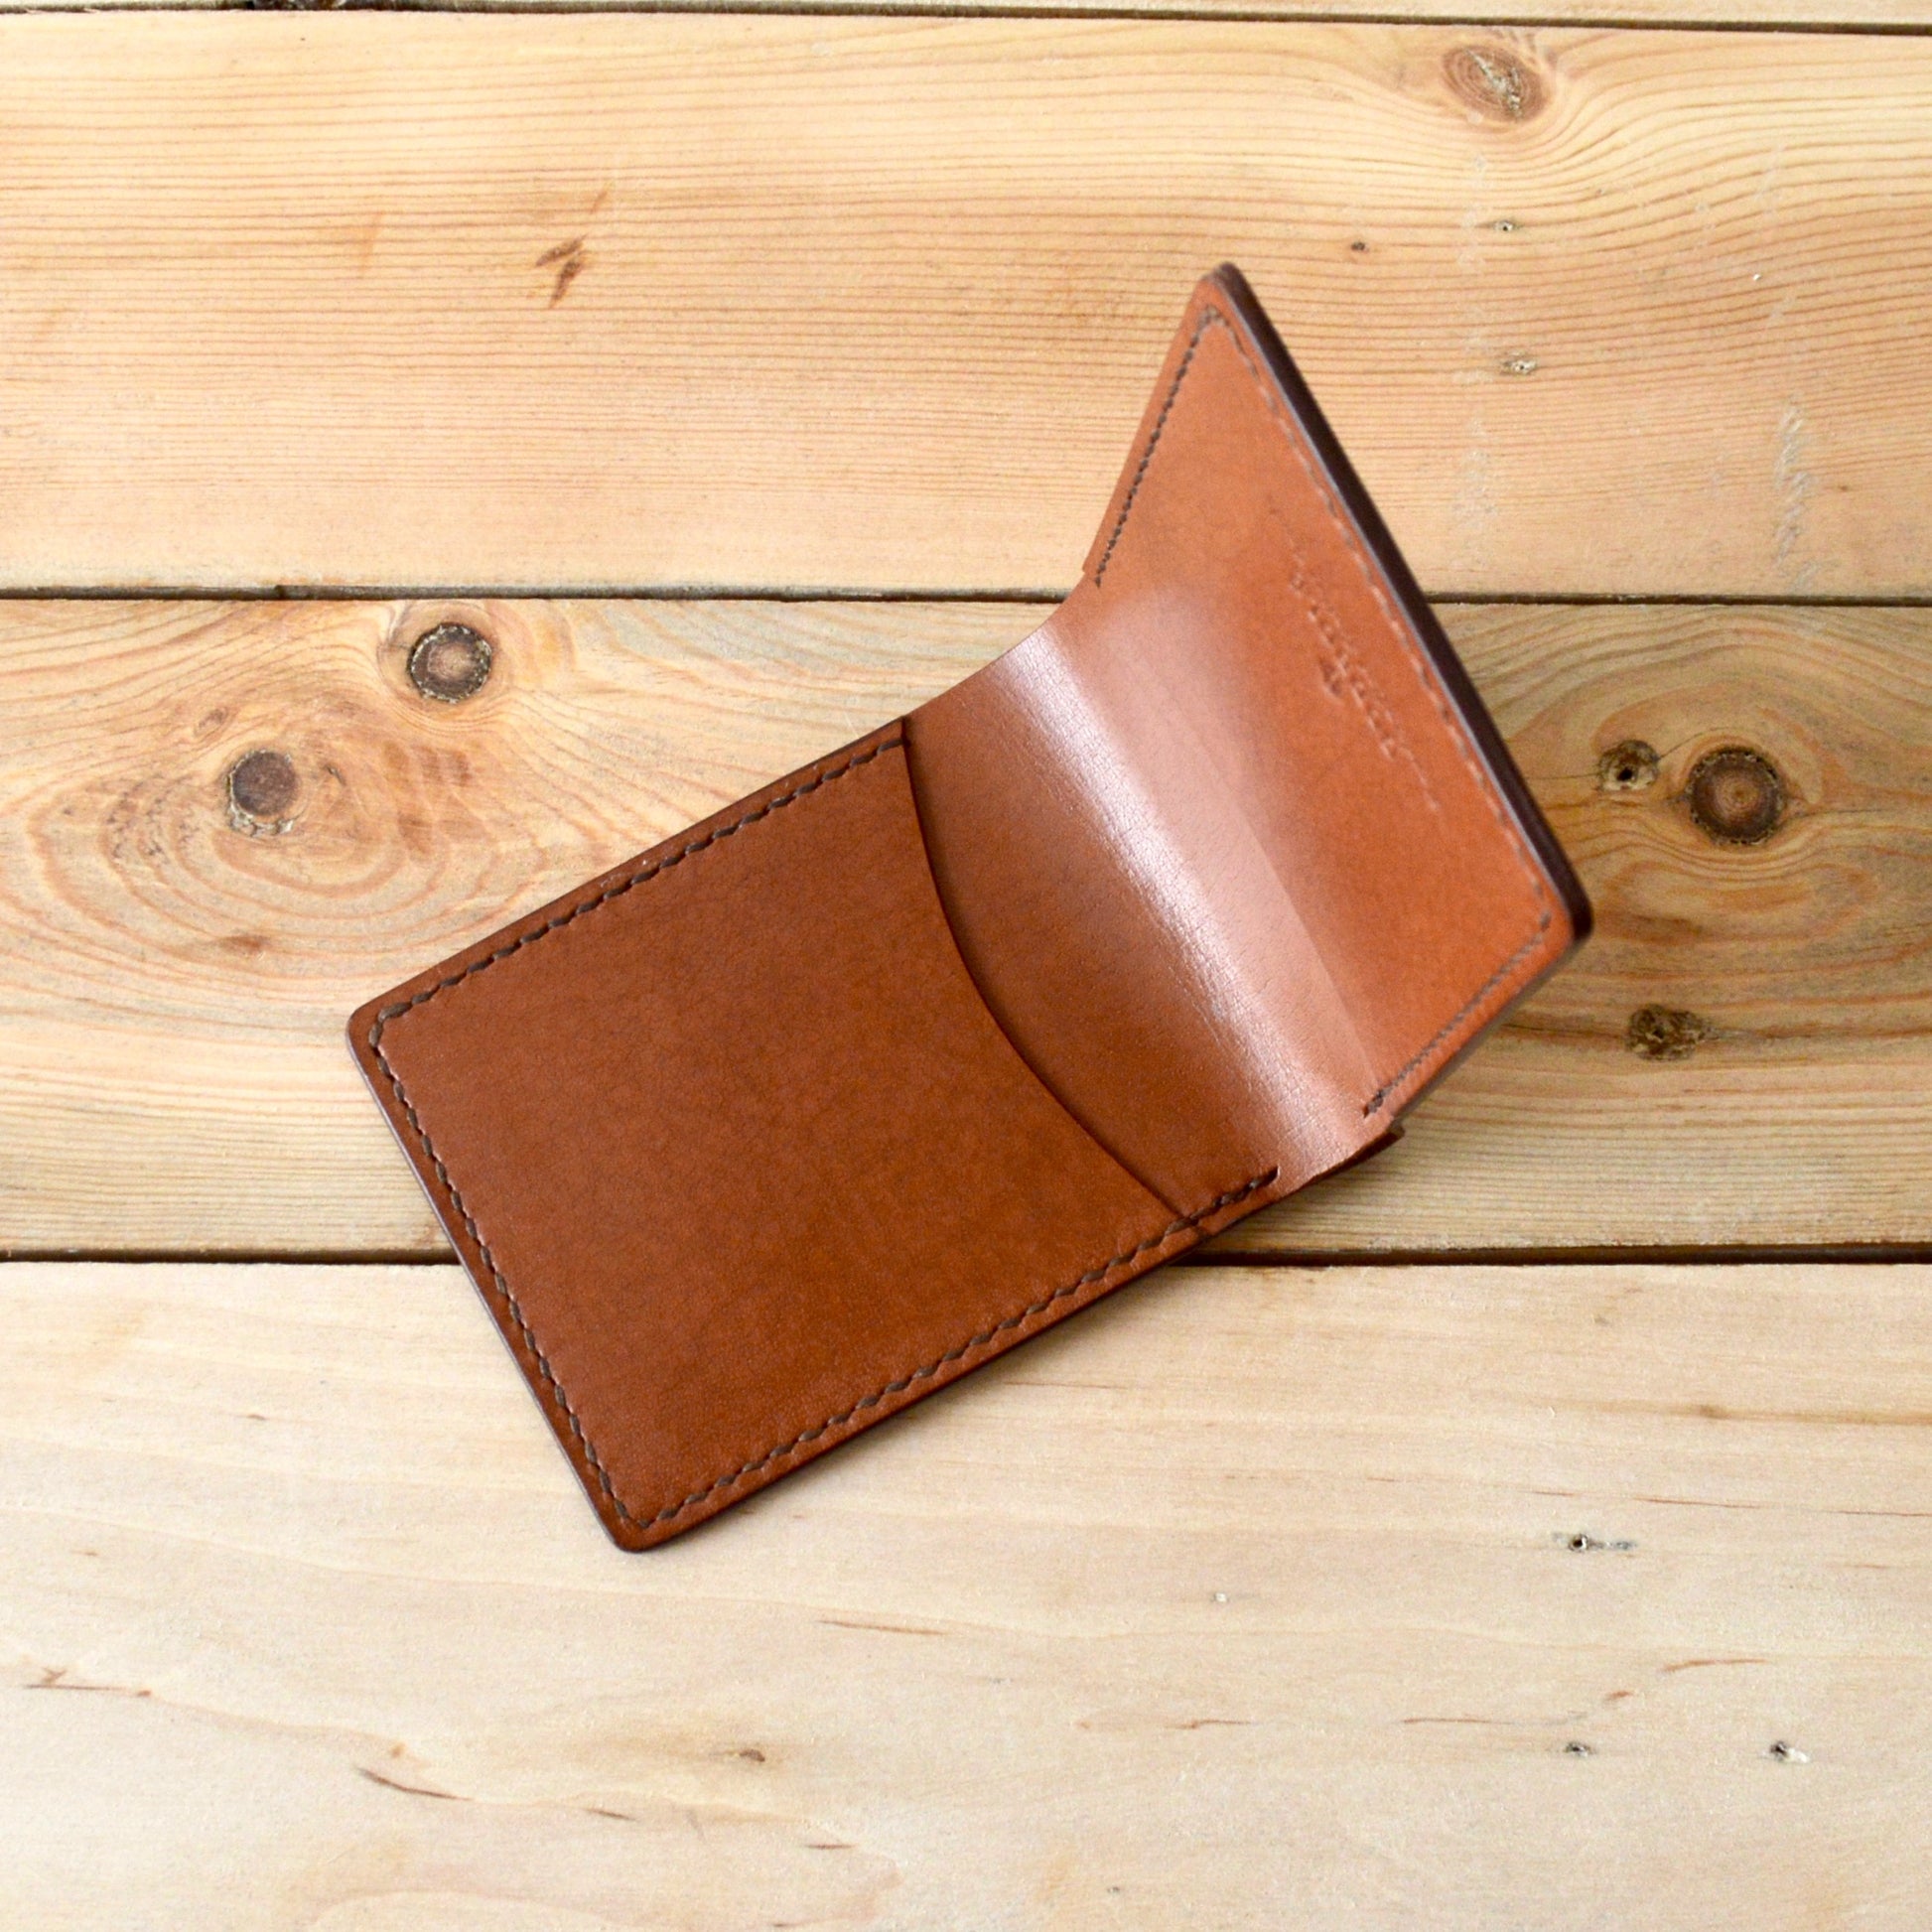 Leather Wallets for Men: Vegetable Tan Slim Card Wallet | KMM & Co. Yes